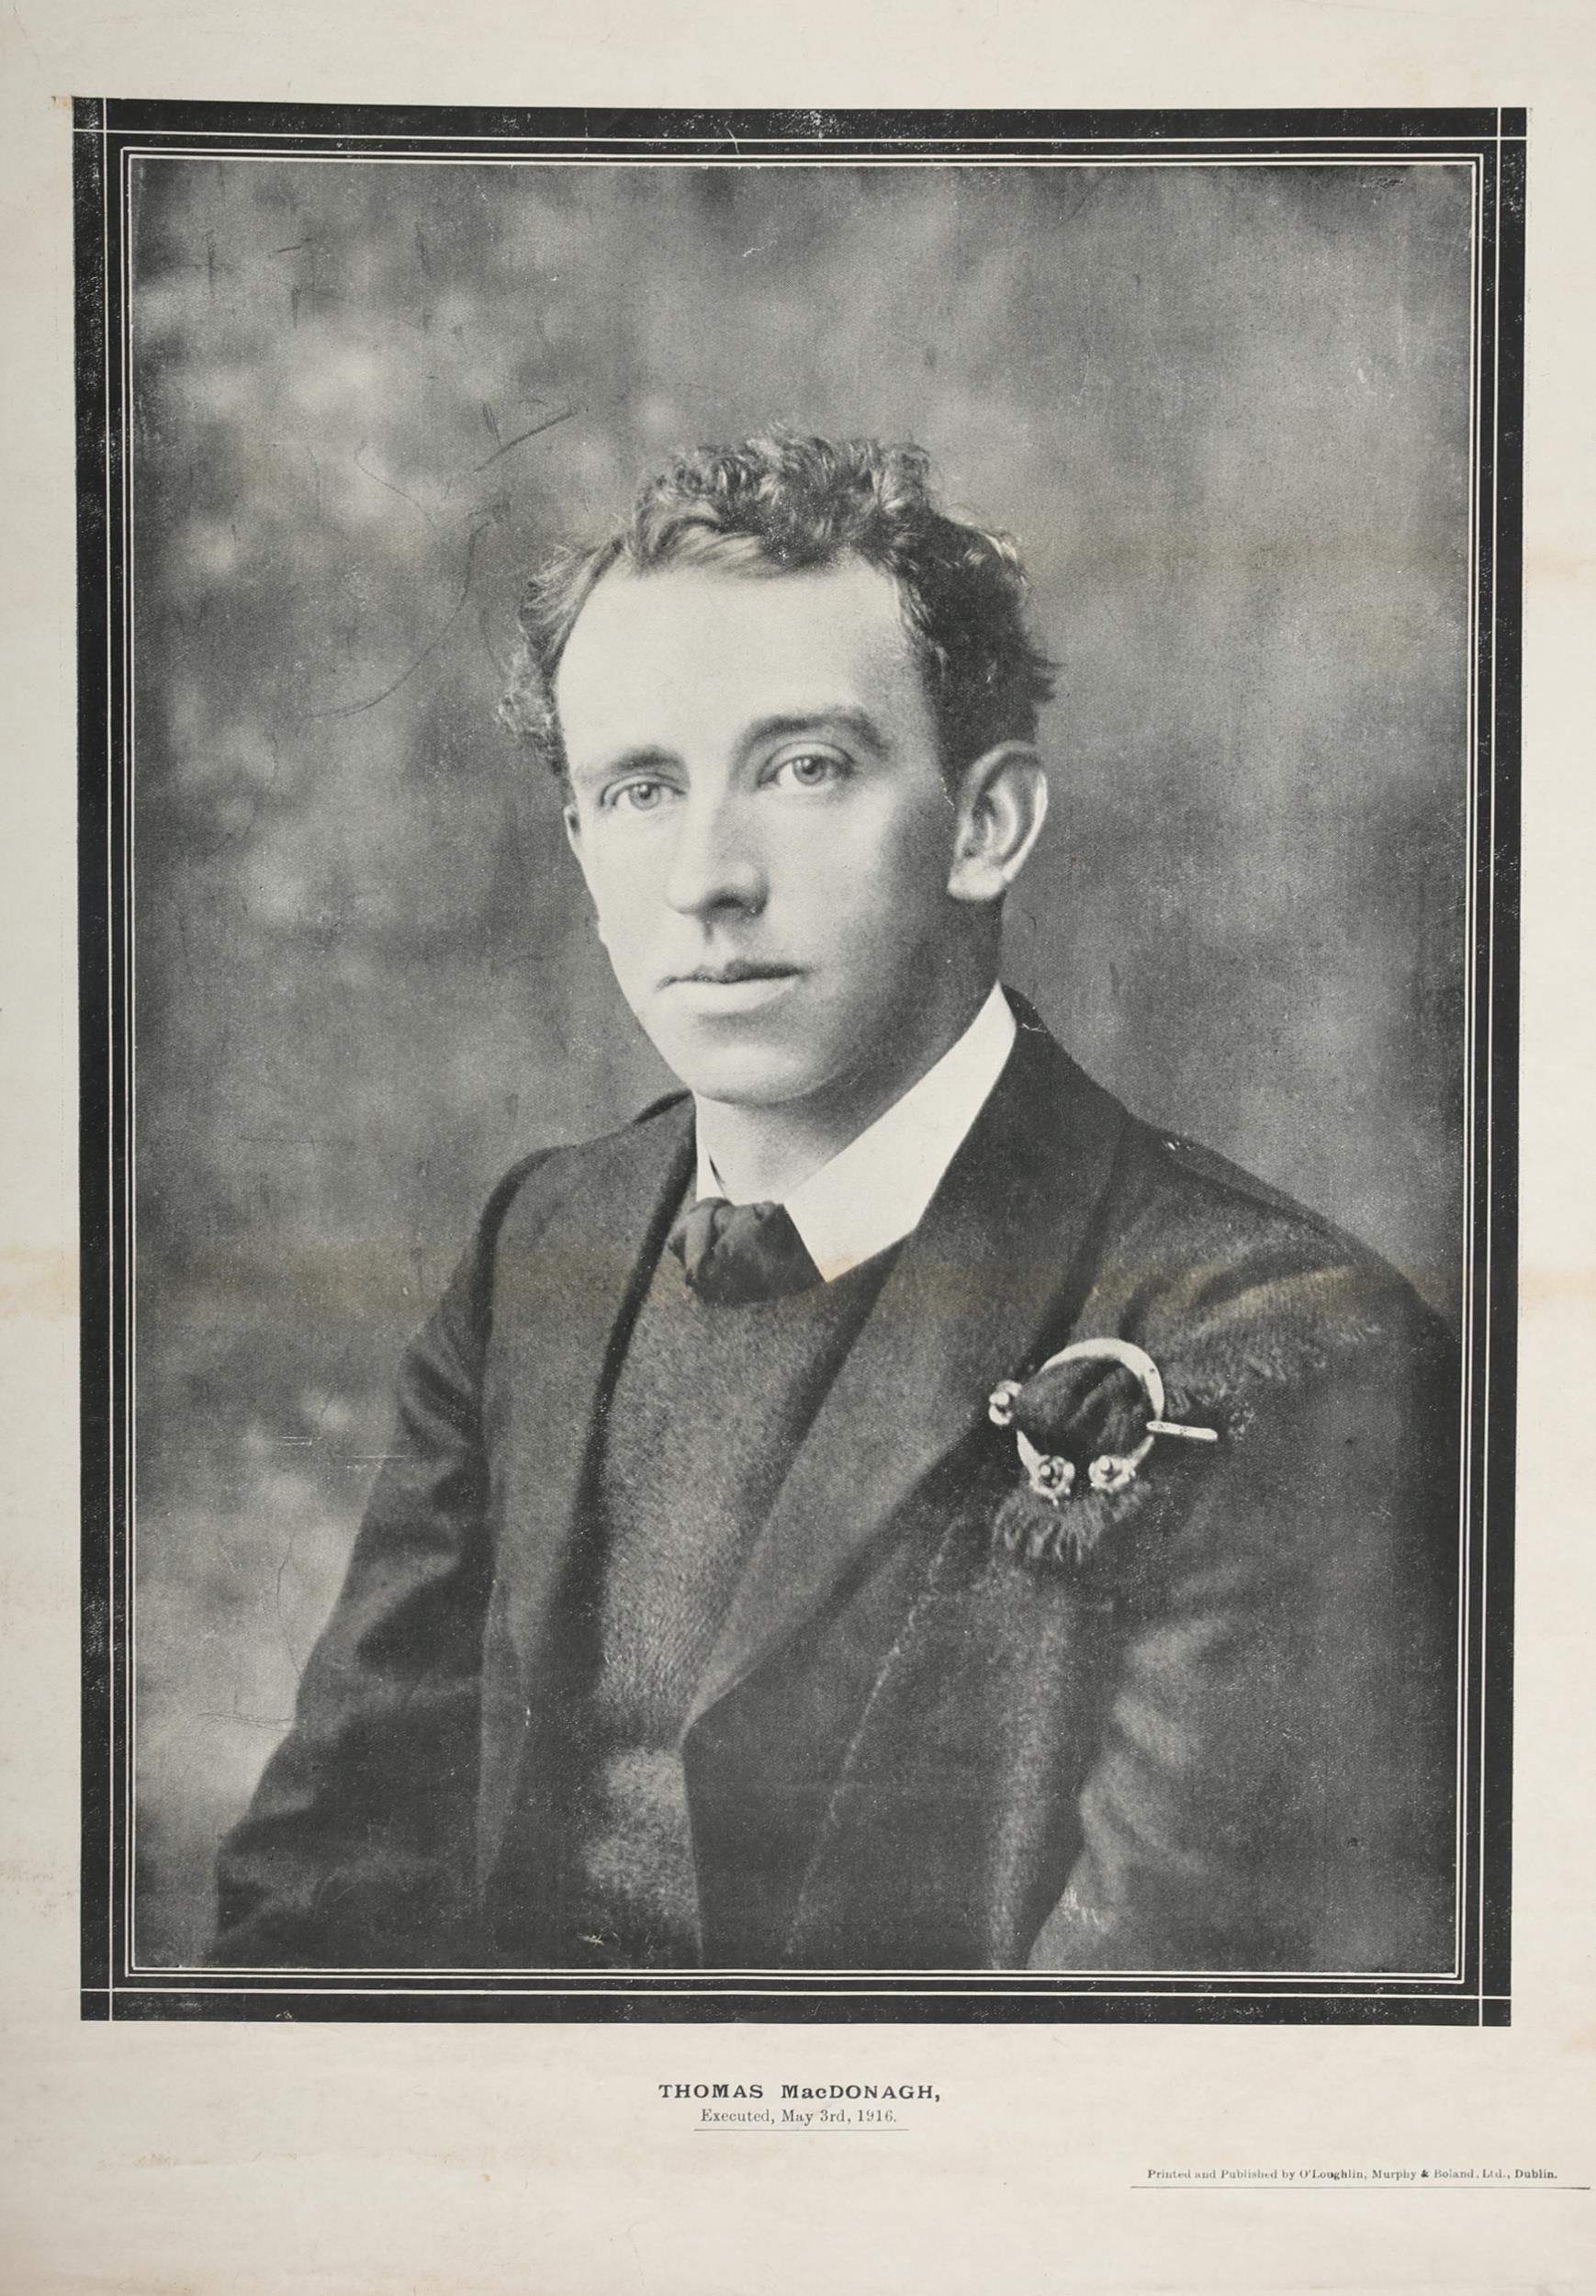 1916 Rising, portraits of executed leaders. Half-length photographs of Thomas MacDonagh and Major